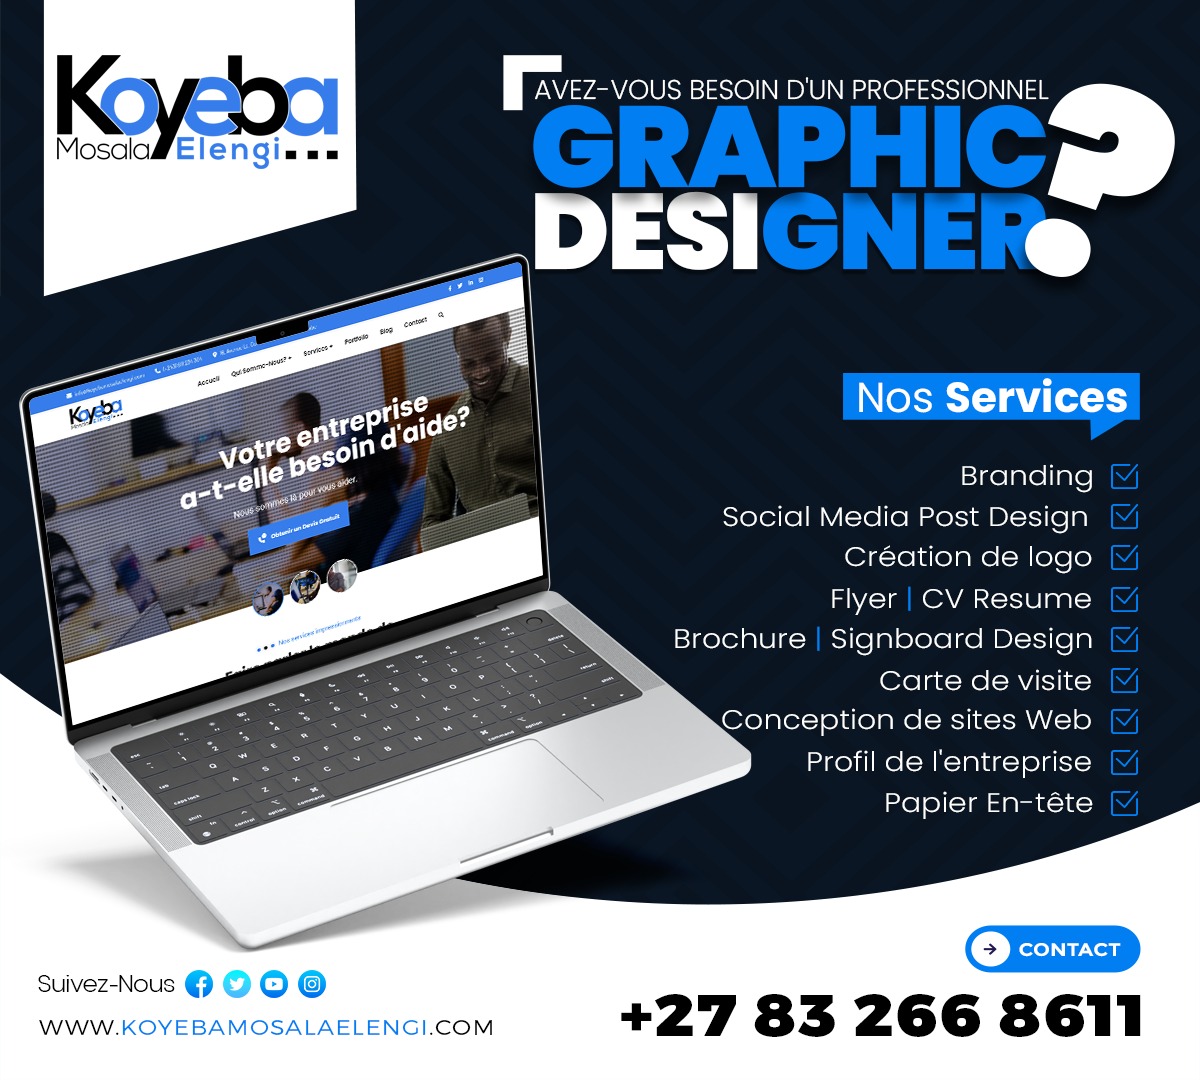 Koyeba Mosala Elengi👌
Chez nous c'est la qualité👌
#digitalart #DigitalArtist #GraphicDesign #digitalmarketing #marketingagency #marketingbusiness #GraphicDesigner